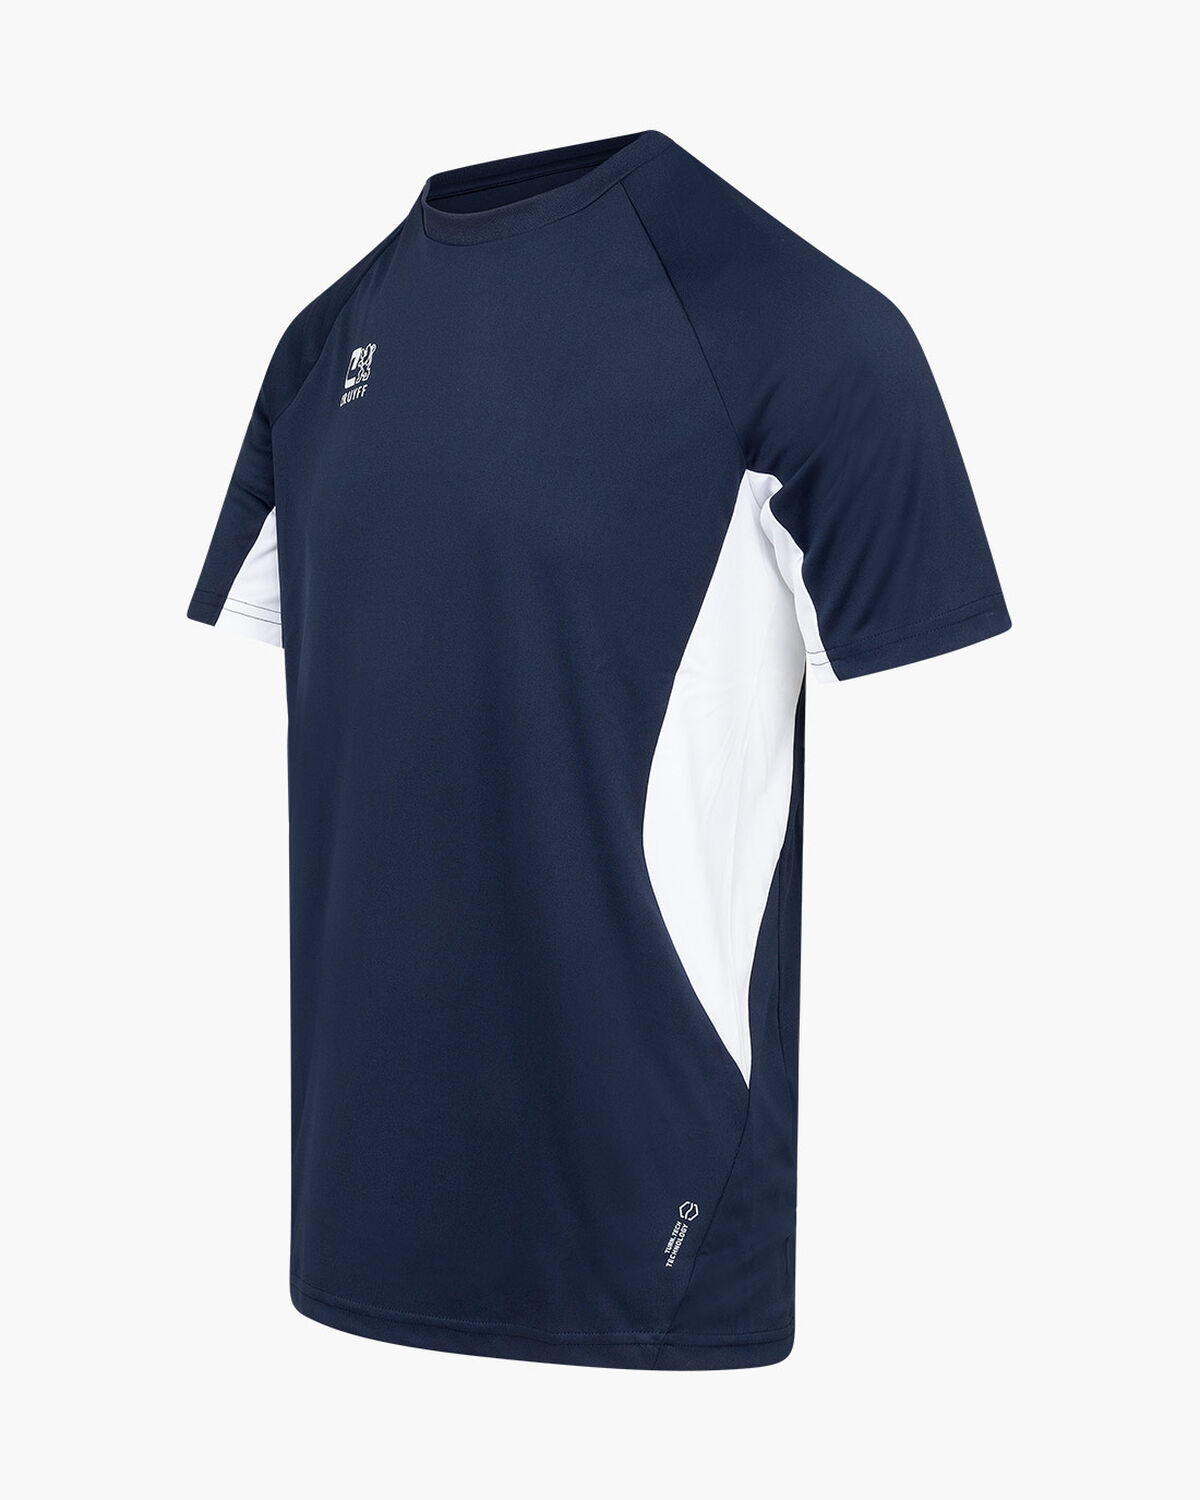 Cruyff Tech Turn Shirt Junior, Navy/White, hi-res